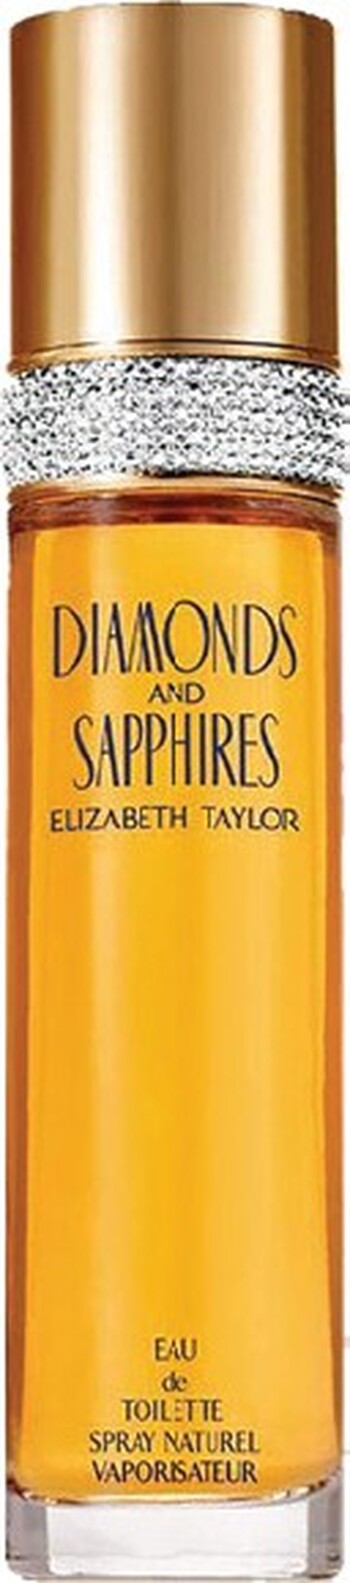 Elizabeth Taylor Diamonds & Sapphires 100mL EDT